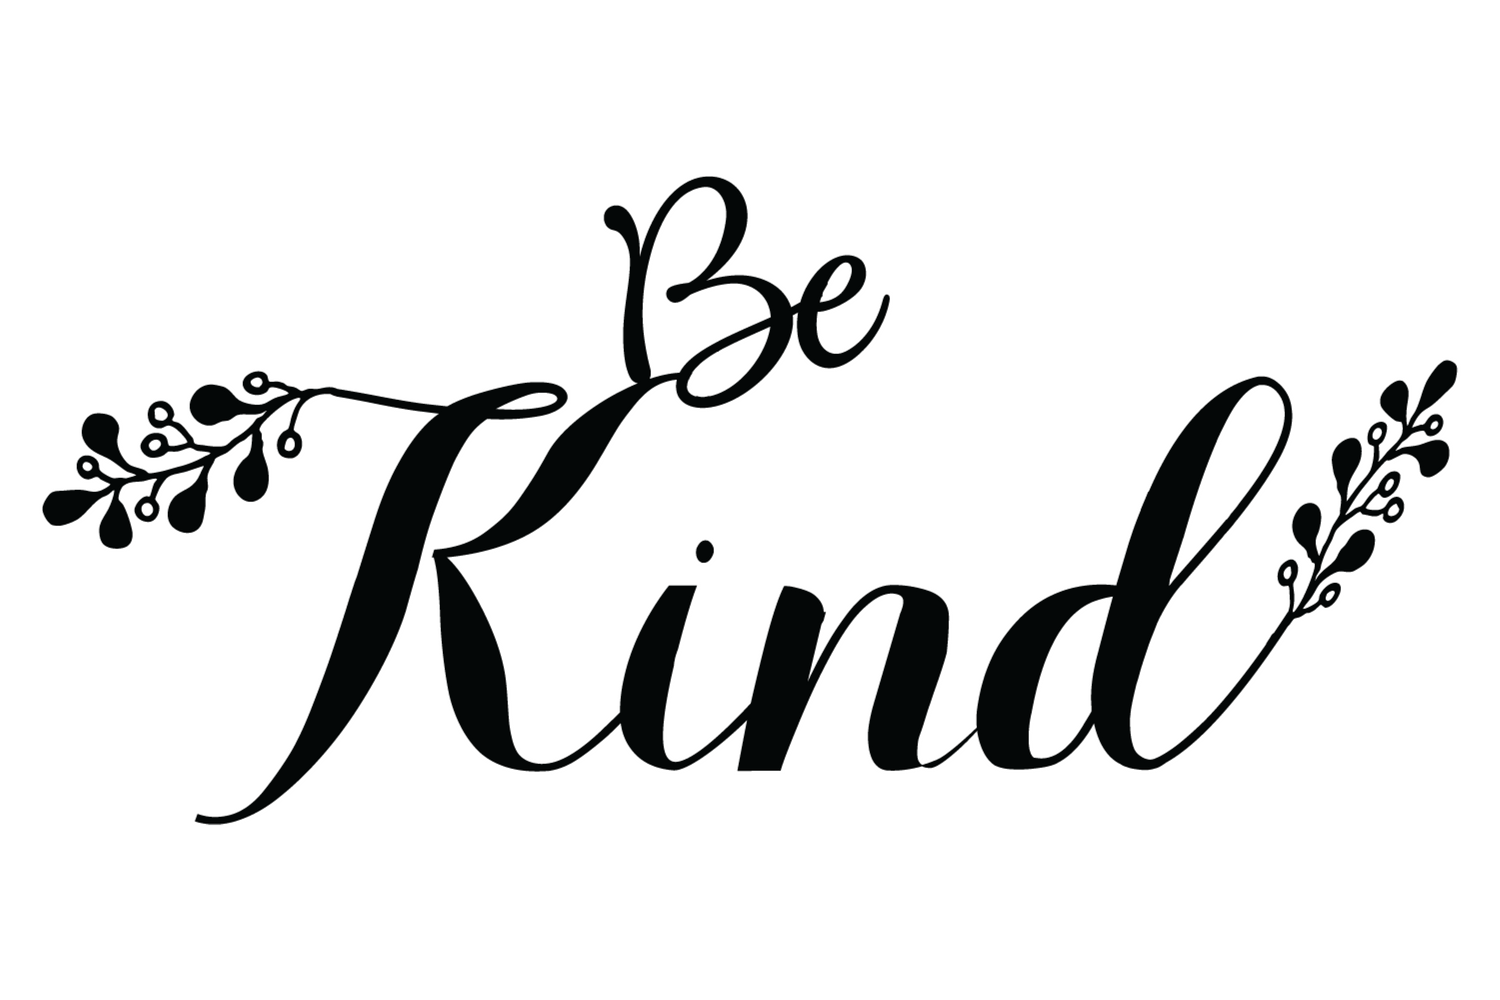 Dem kind. Be kind надпись. Be kind картинка. Be kind логотип. Надпись Kindness.